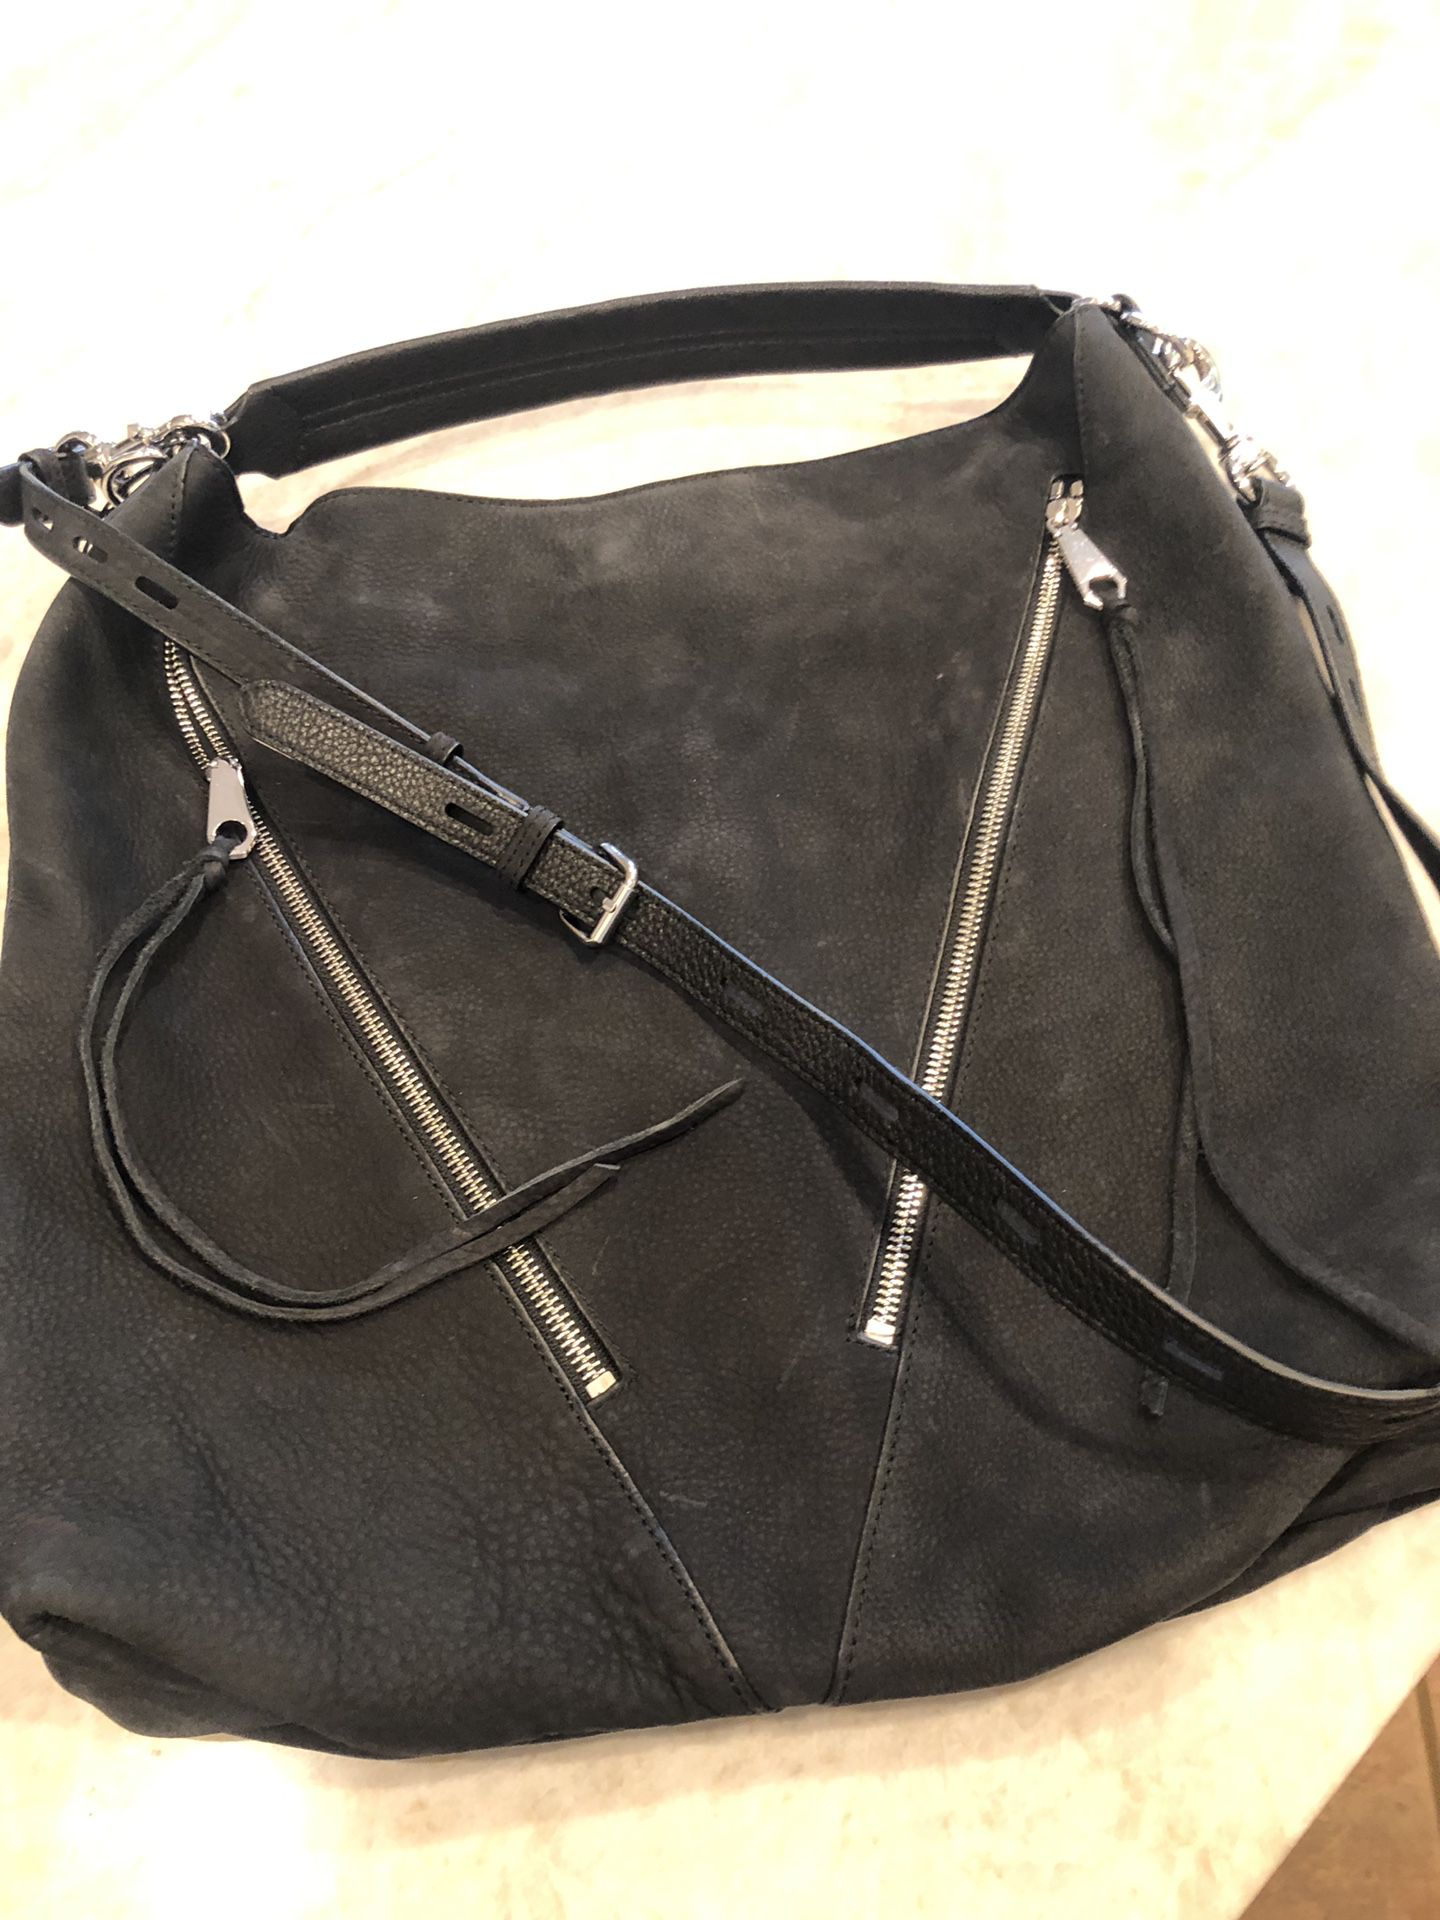 Rebecca Minkoff hobo bag with crossbody strap